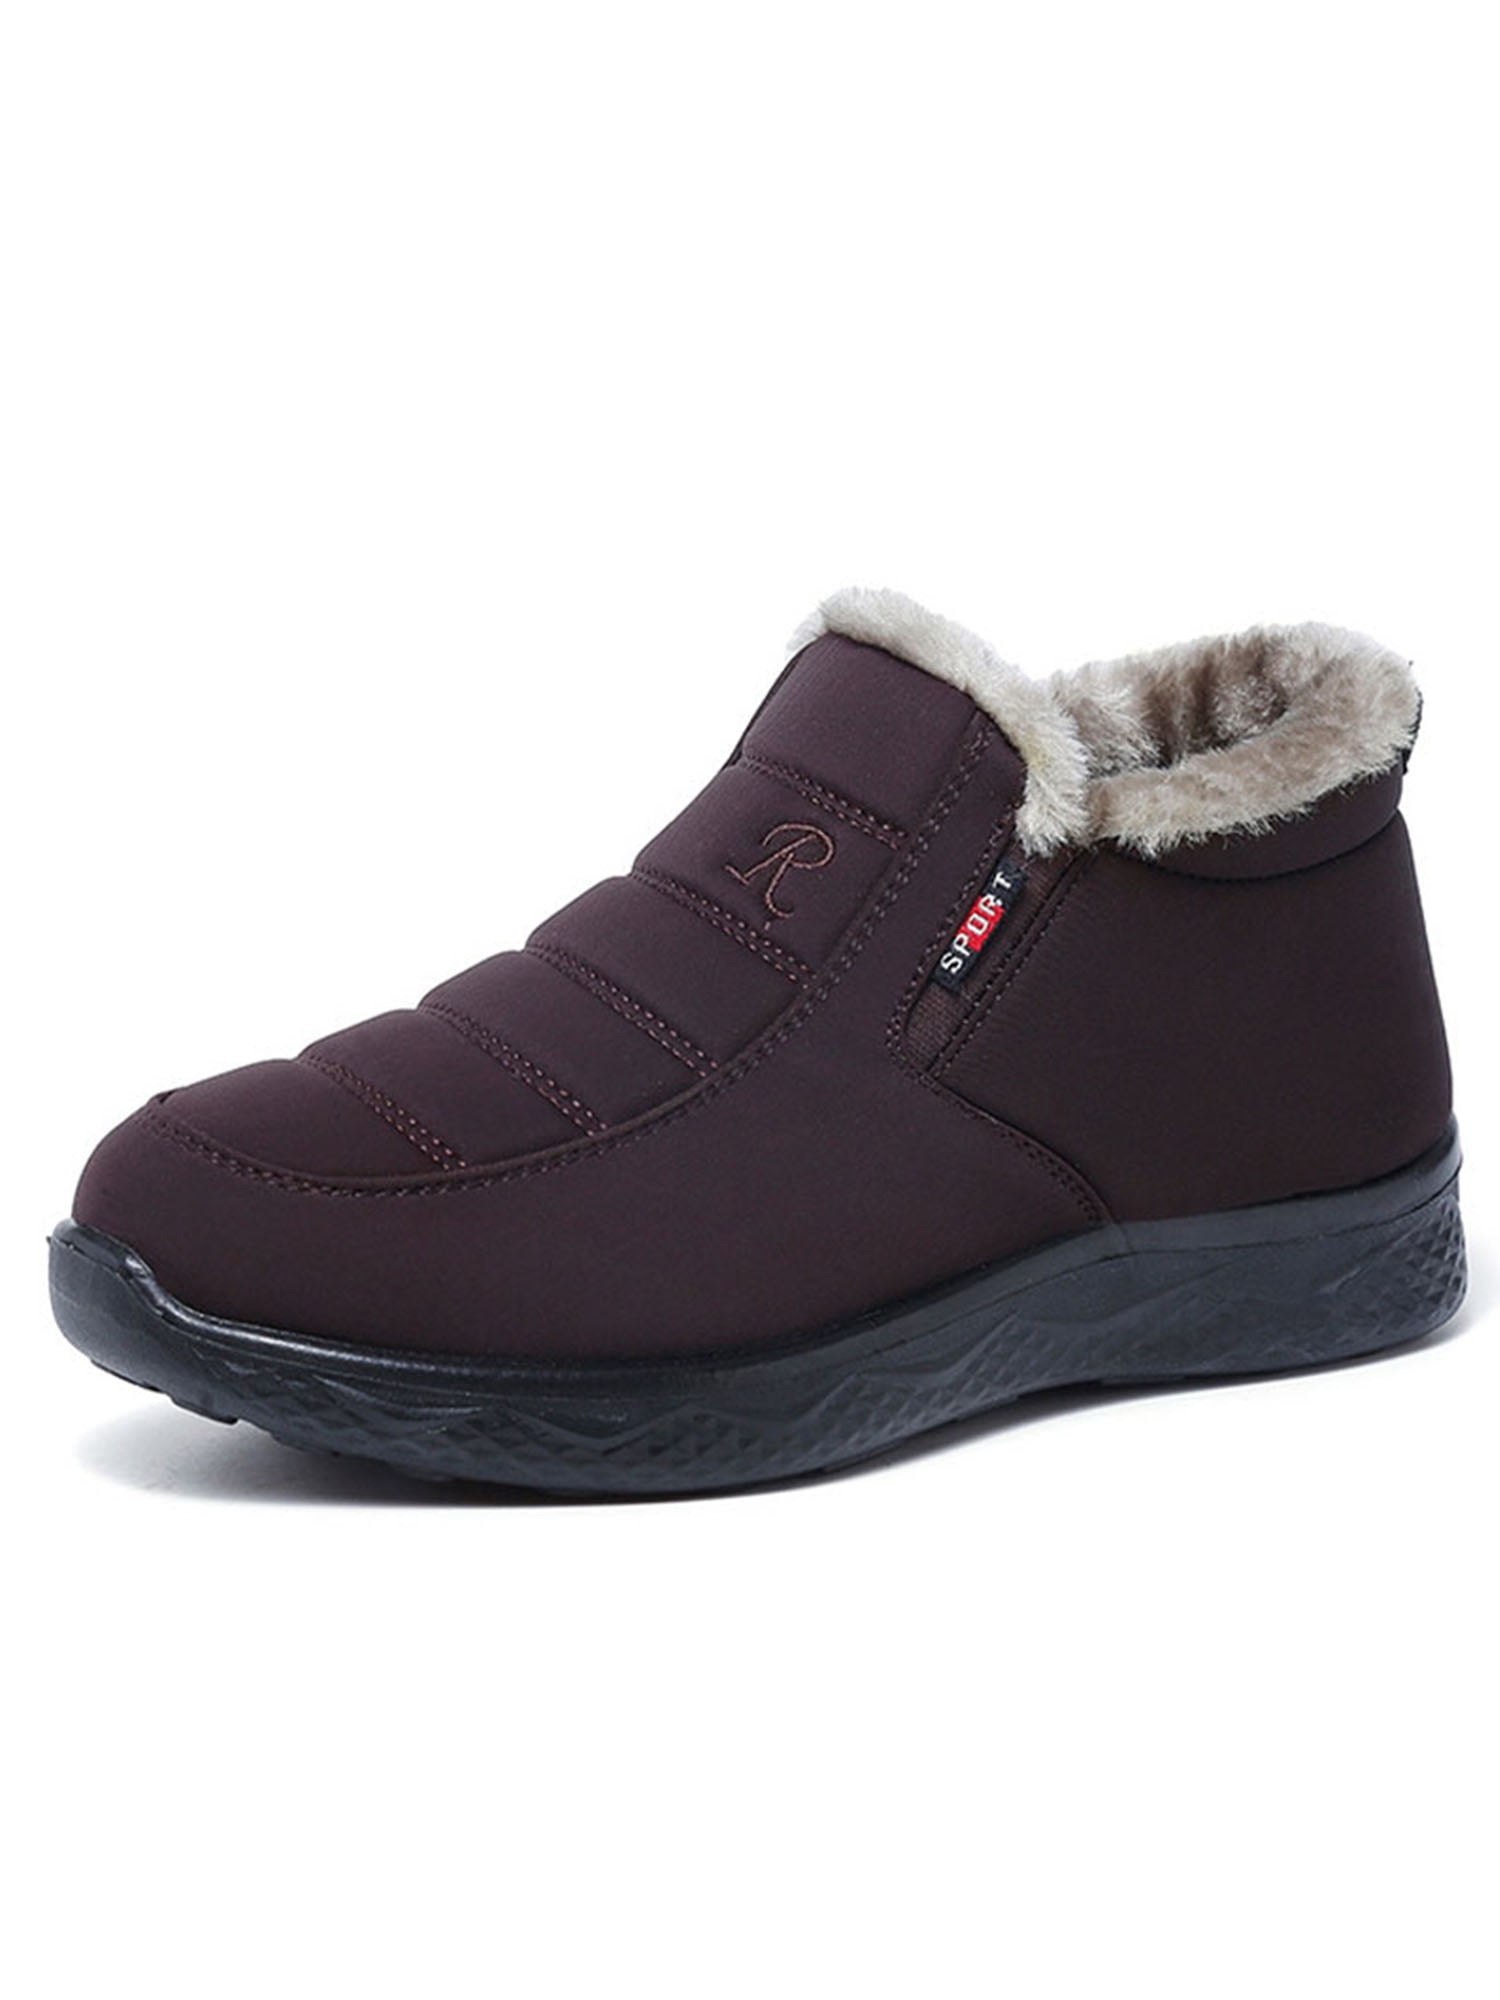 GENILU Winter Boots for Women Mens Comfortable Non Slip Warm Snow ...